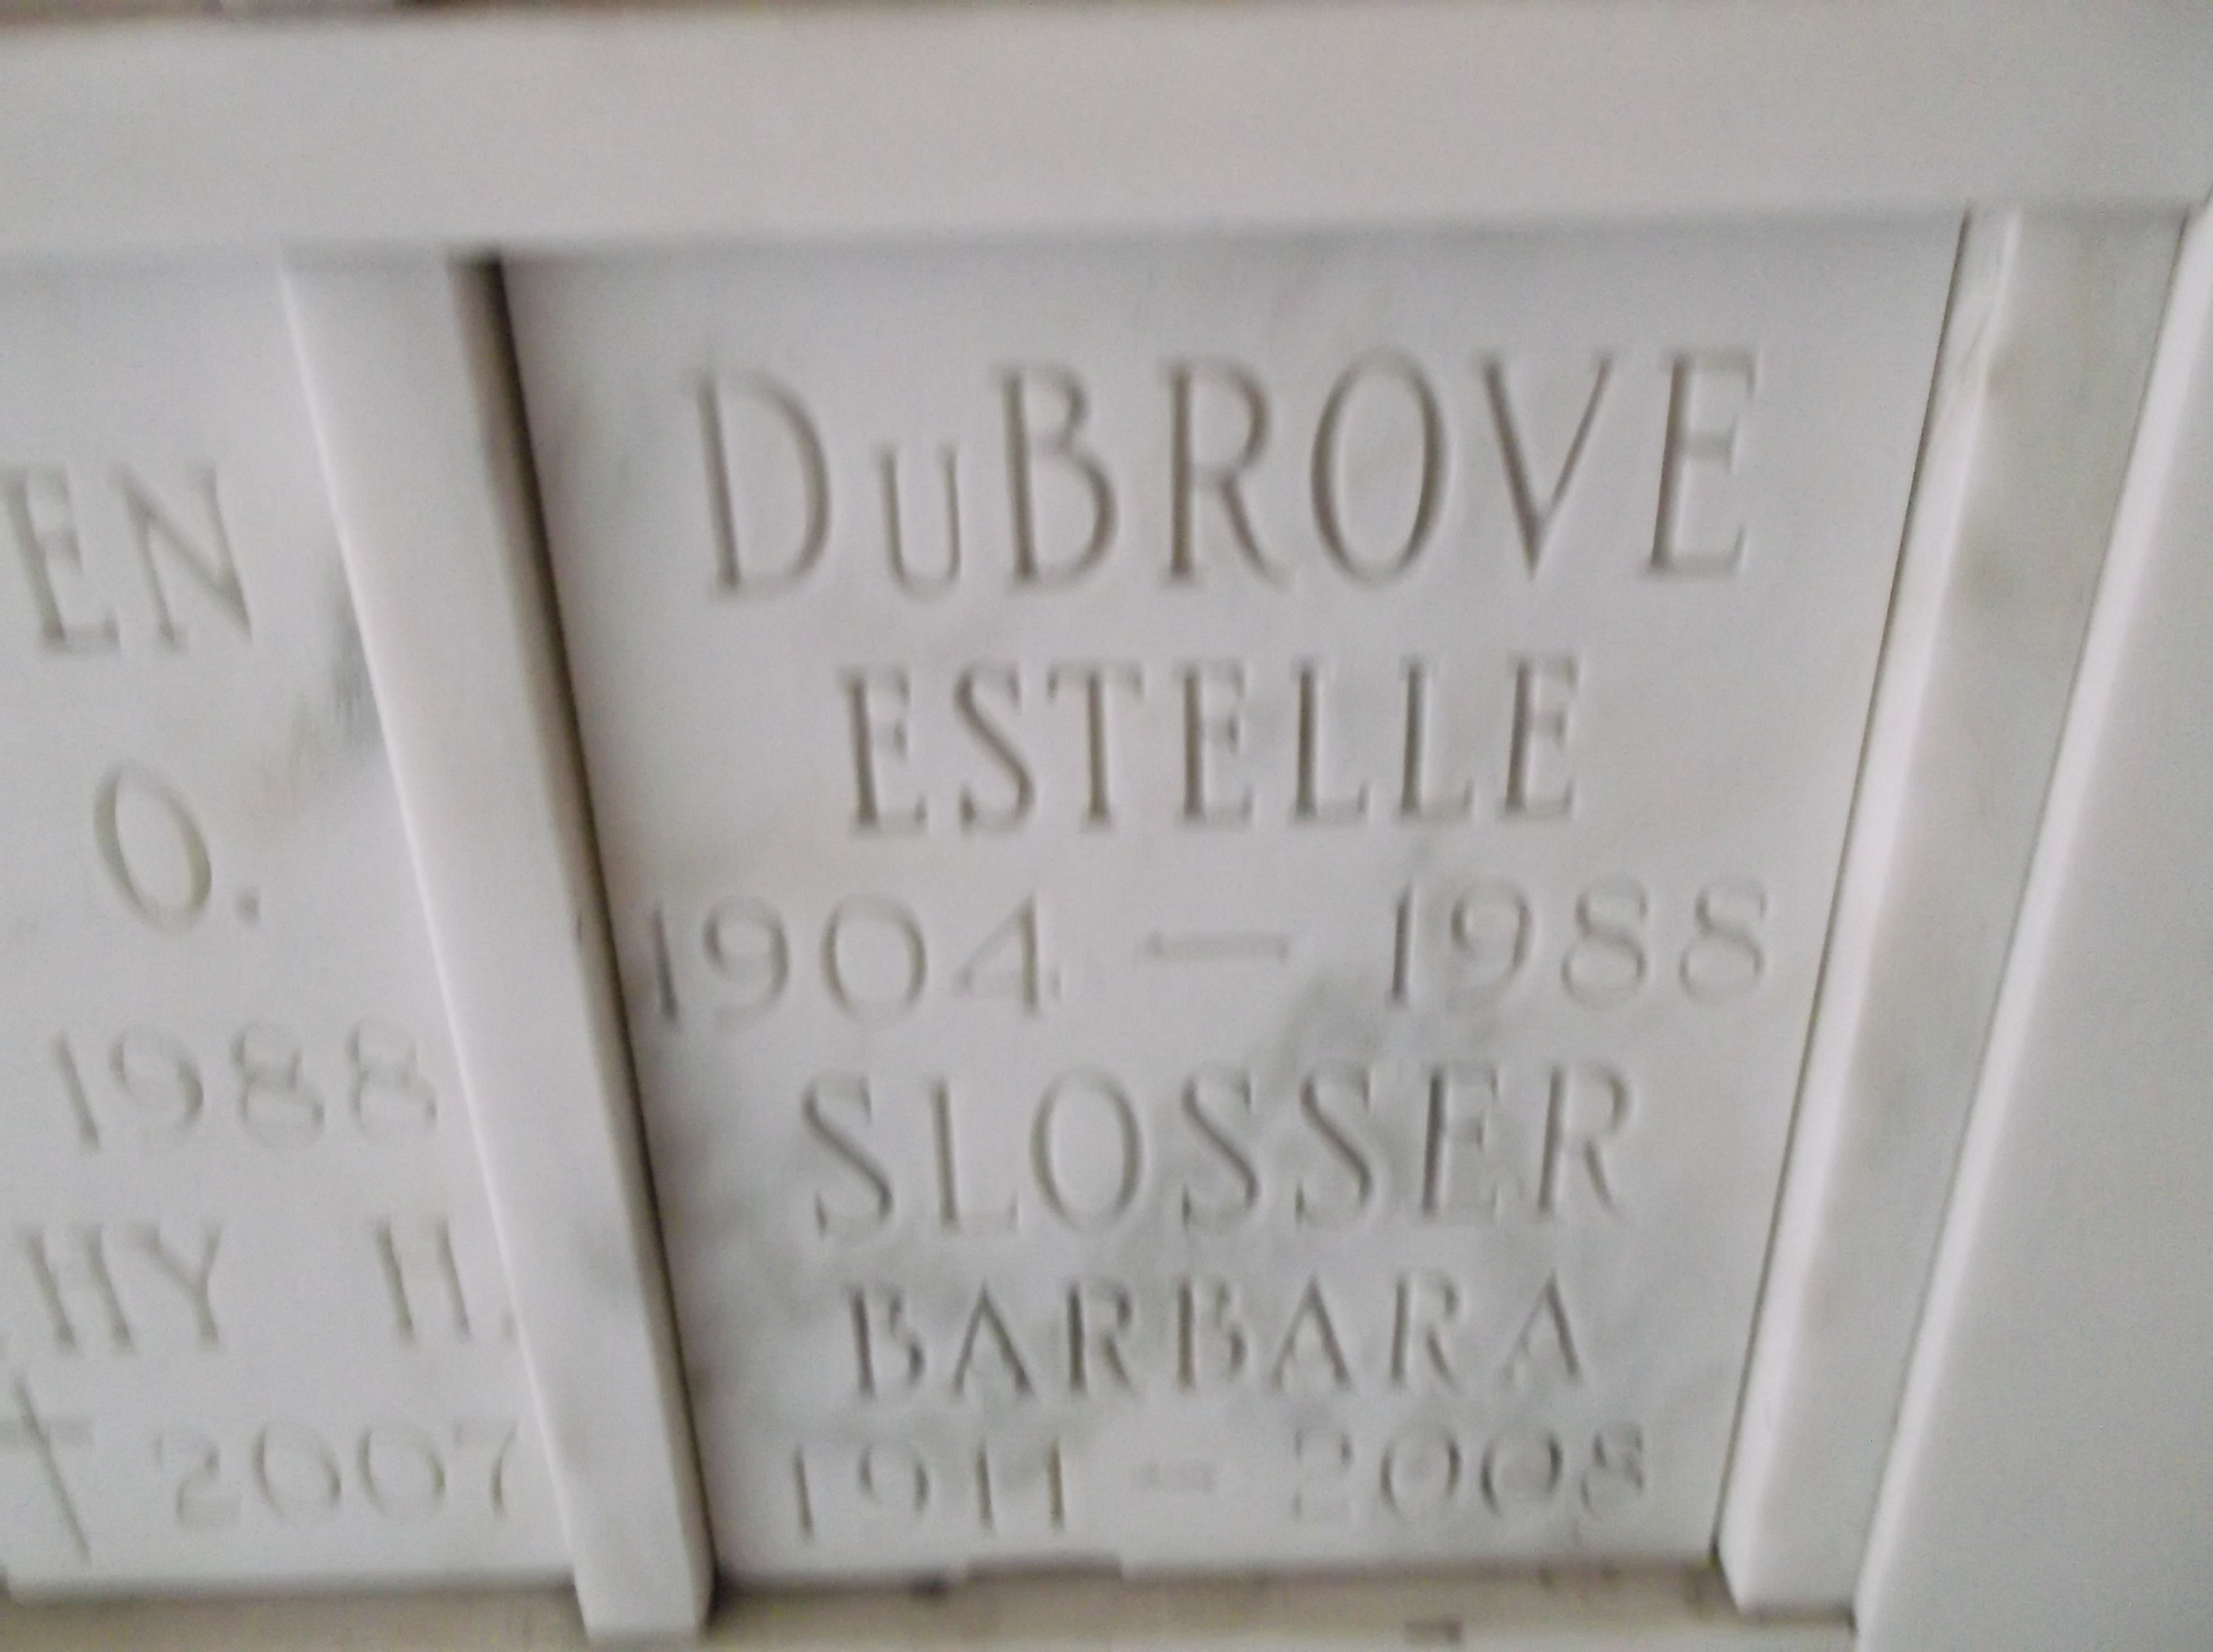 Estelle DuBrove